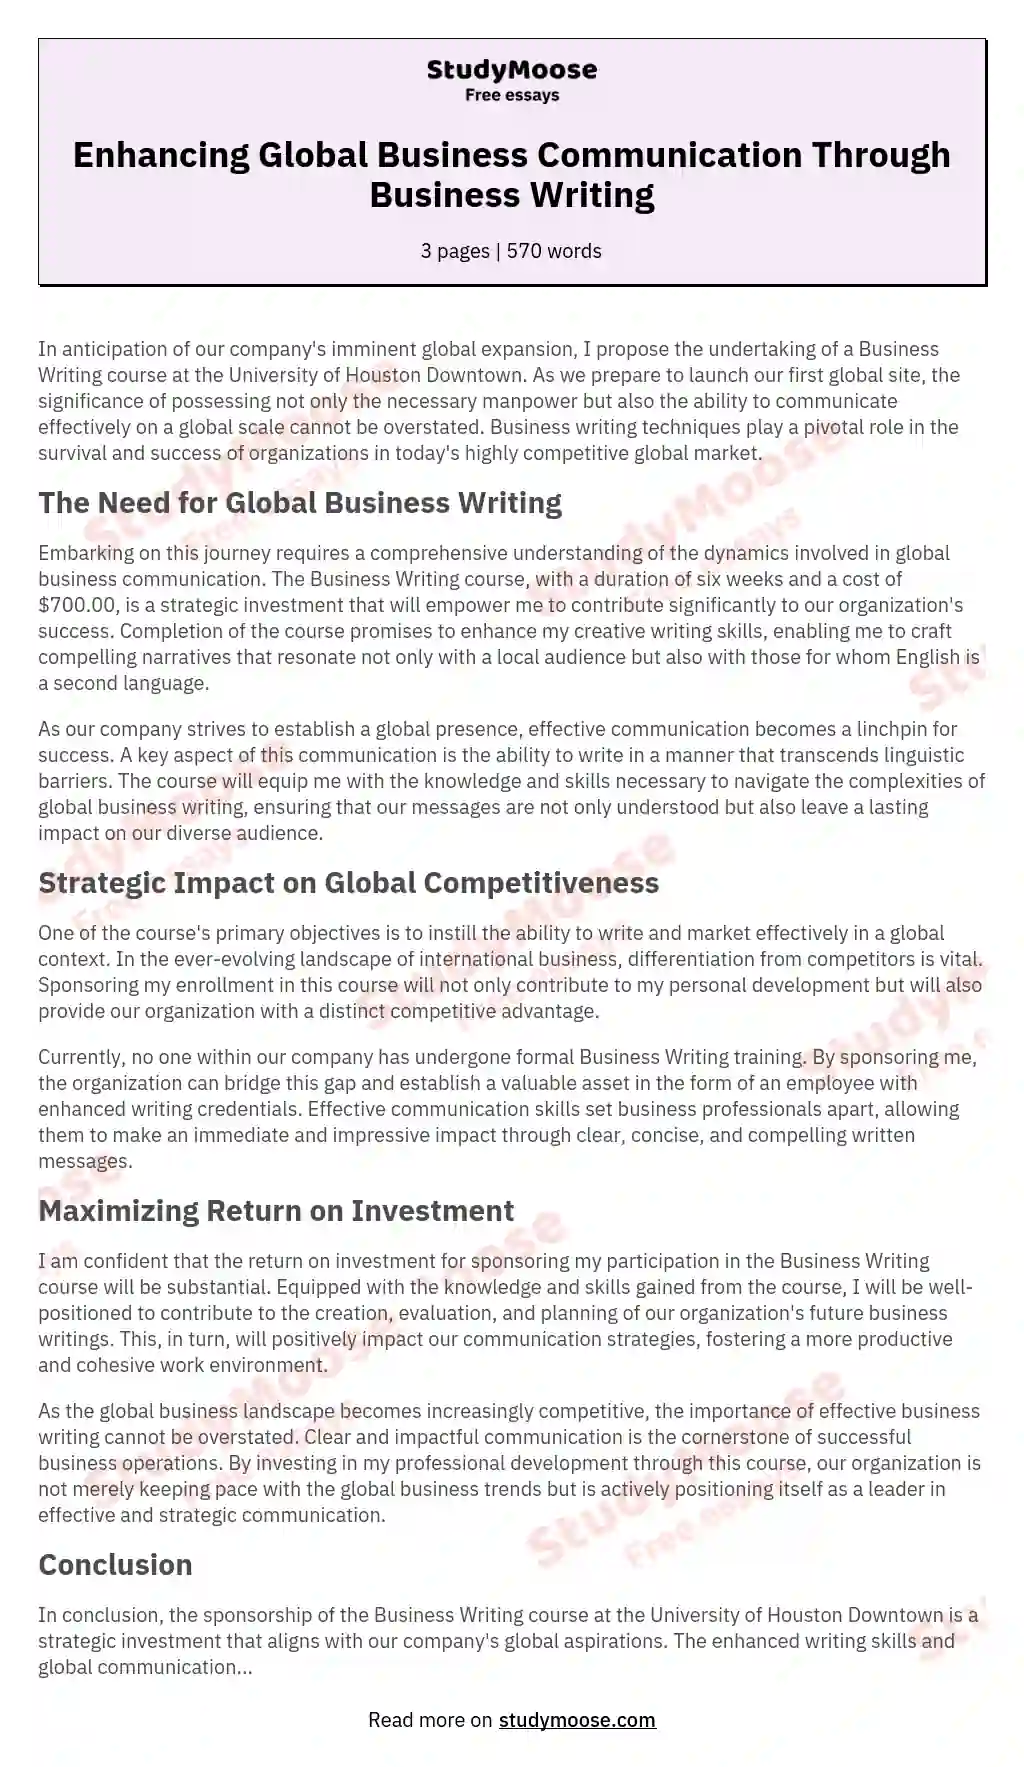 Enhancing Global Business Communication Through Business Writing essay